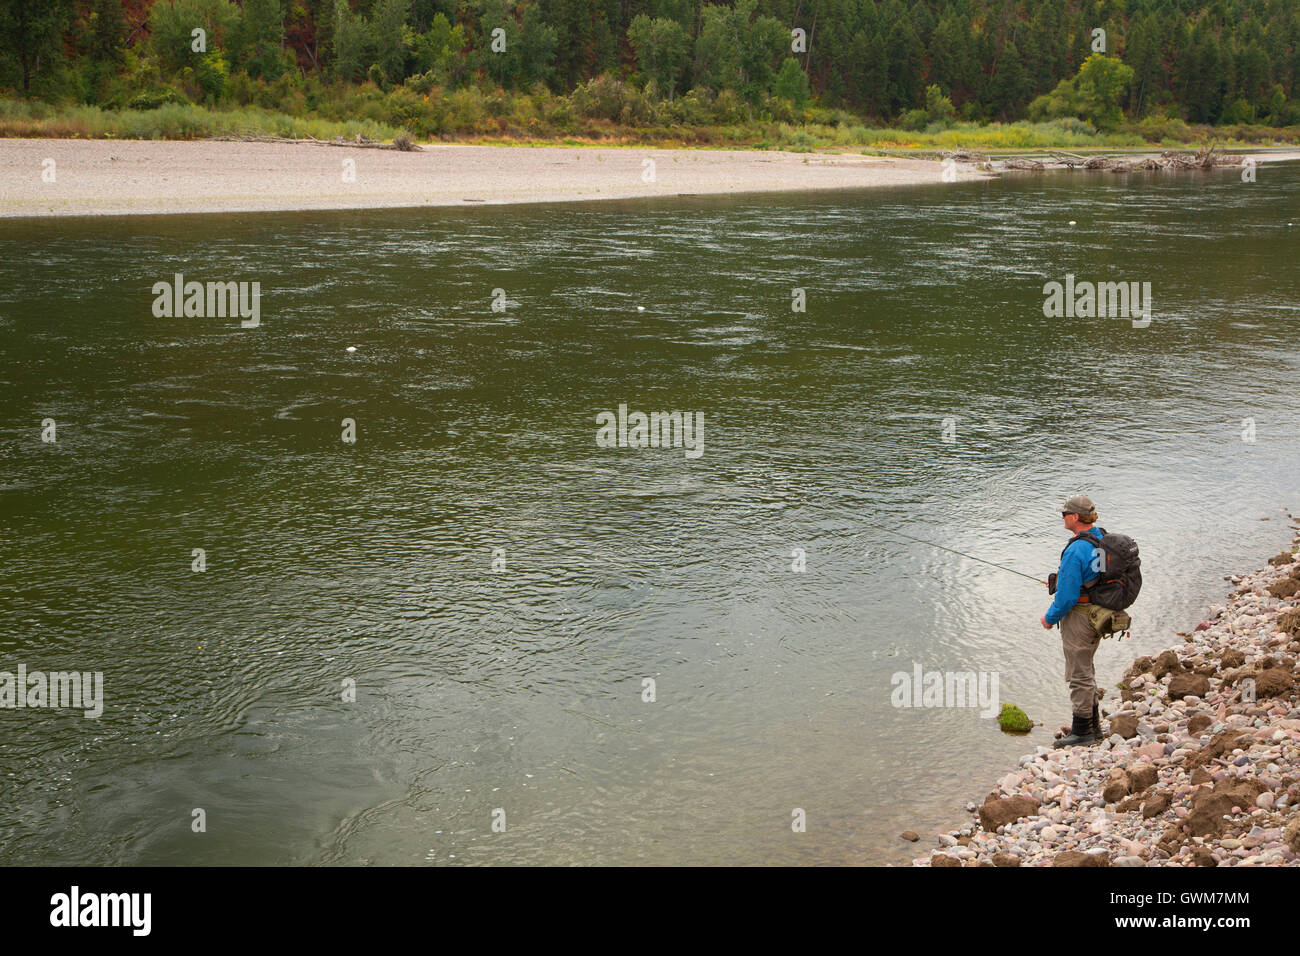 Flyfishing the Clark Fork River, Erskine Fishing Access Site, Montana Stock Photo